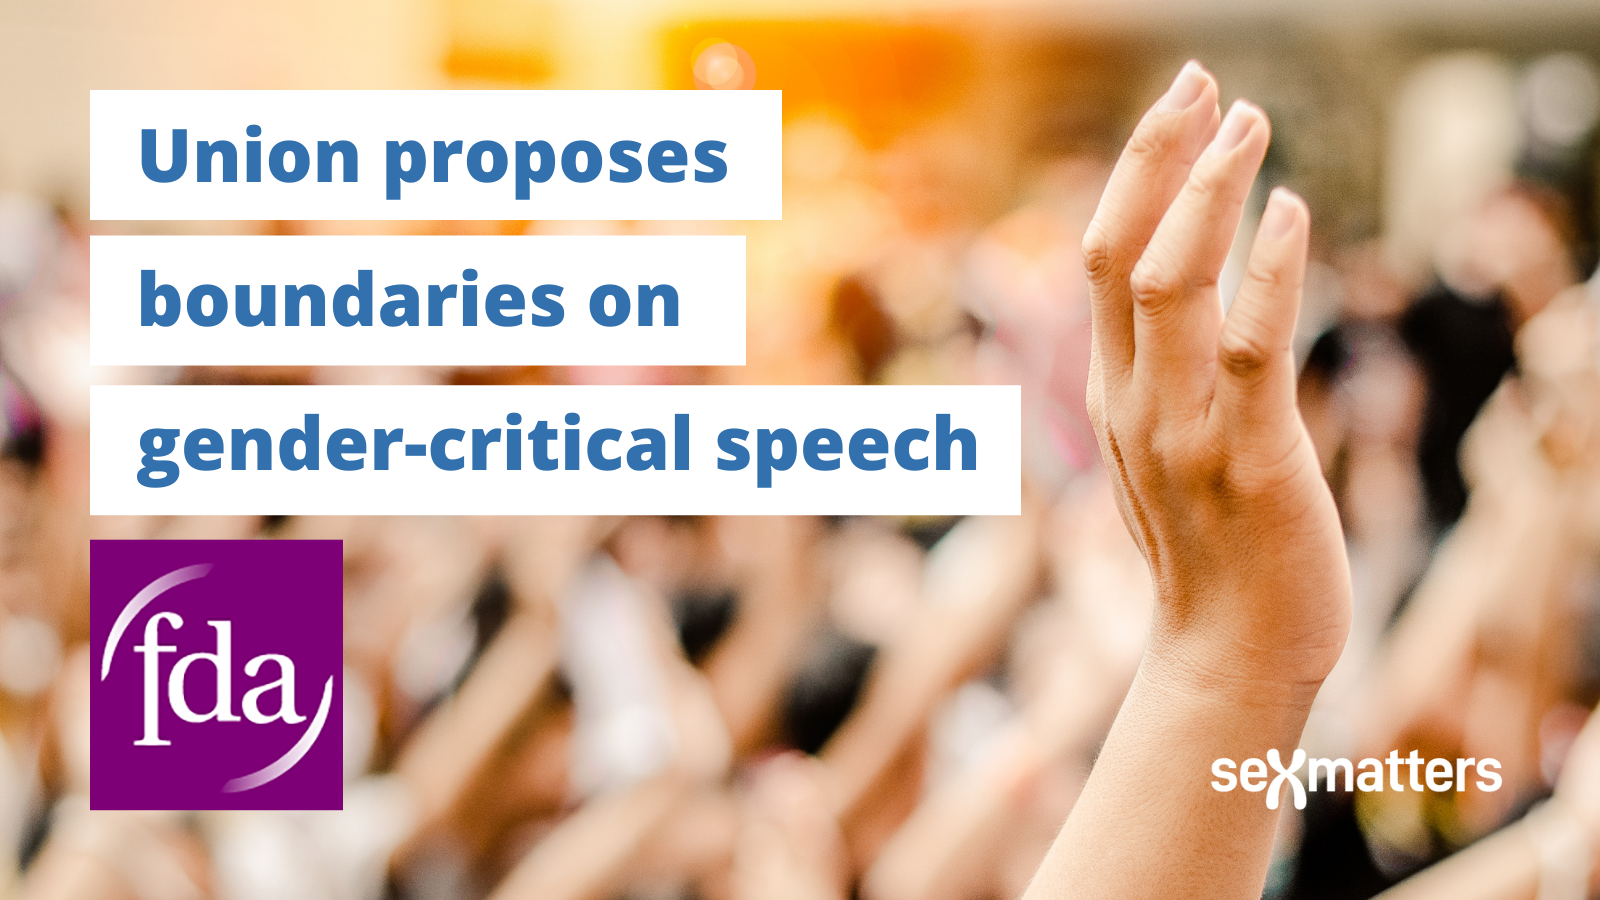 Union proposes boundaries on gender-critical speech